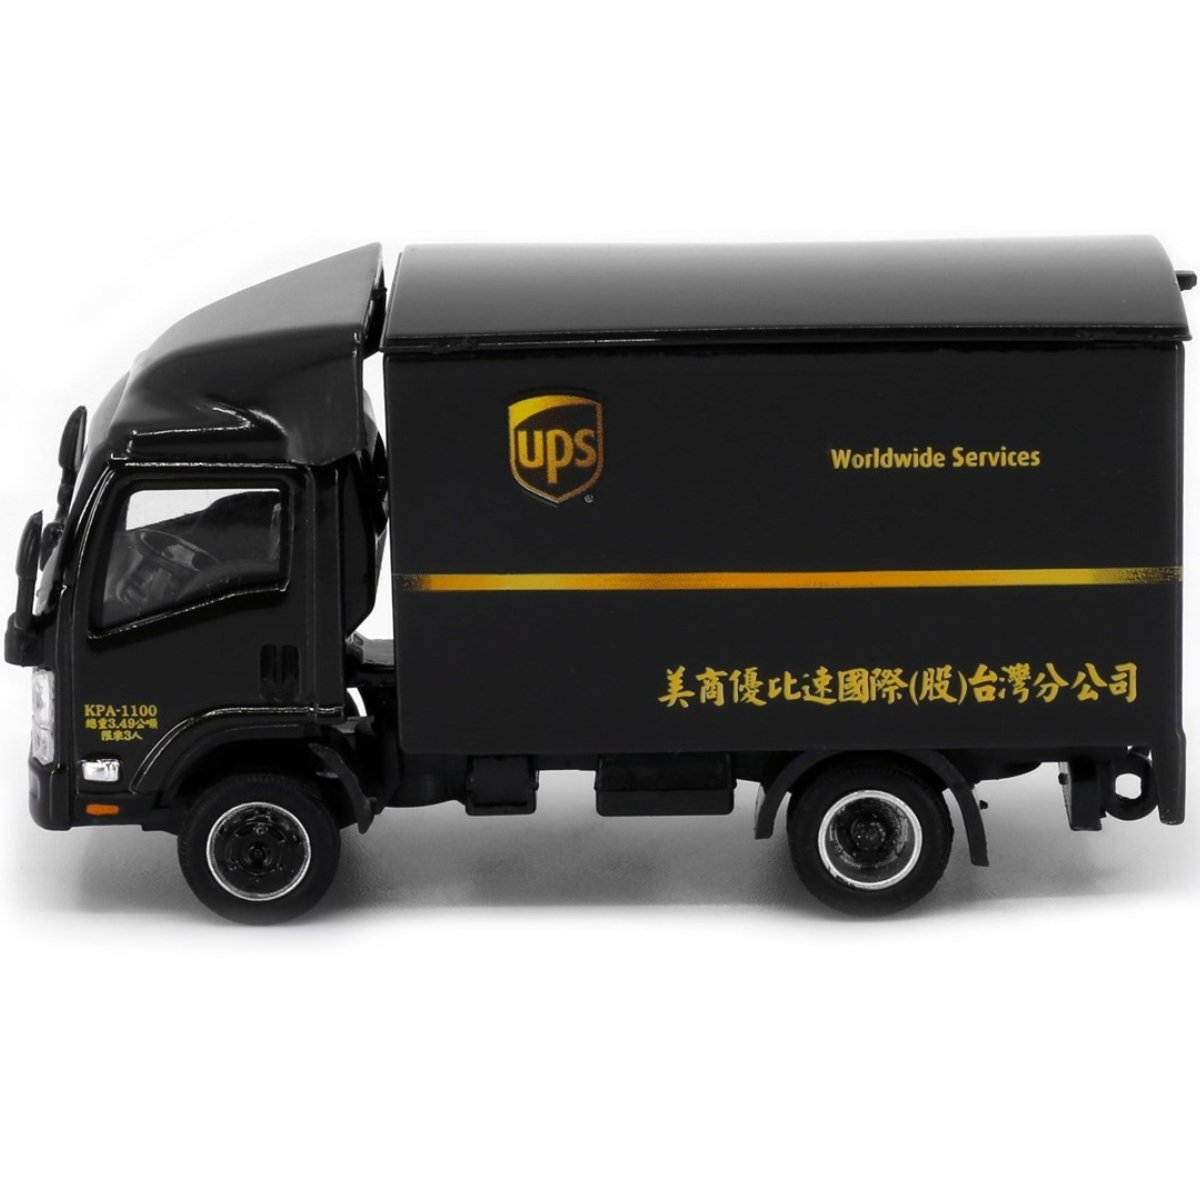 Tiny Models Isuzu N Series Taiwan Box Lorry UPS (1:76 Scale) - Phillips Hobbies